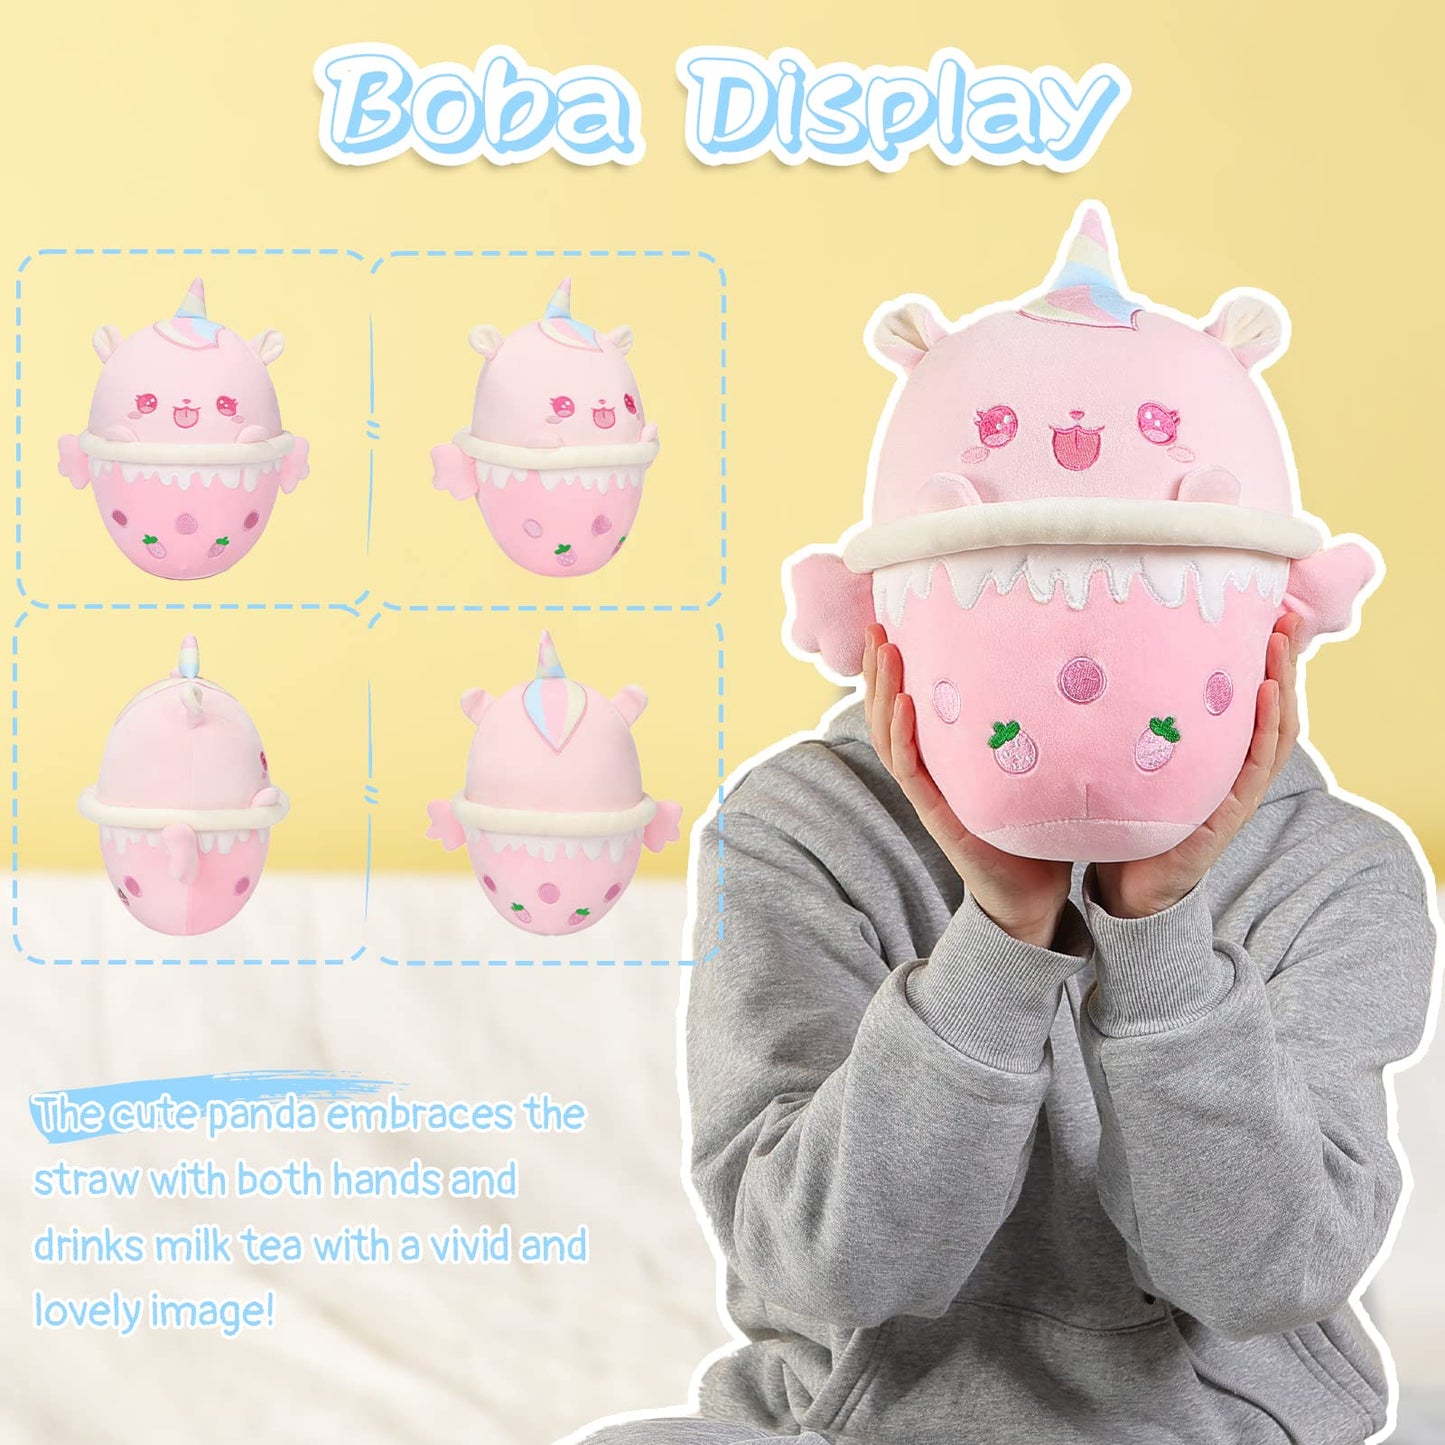 Aixini Boba Plush Bubble Tea Stuffed Animal Pillow Toy